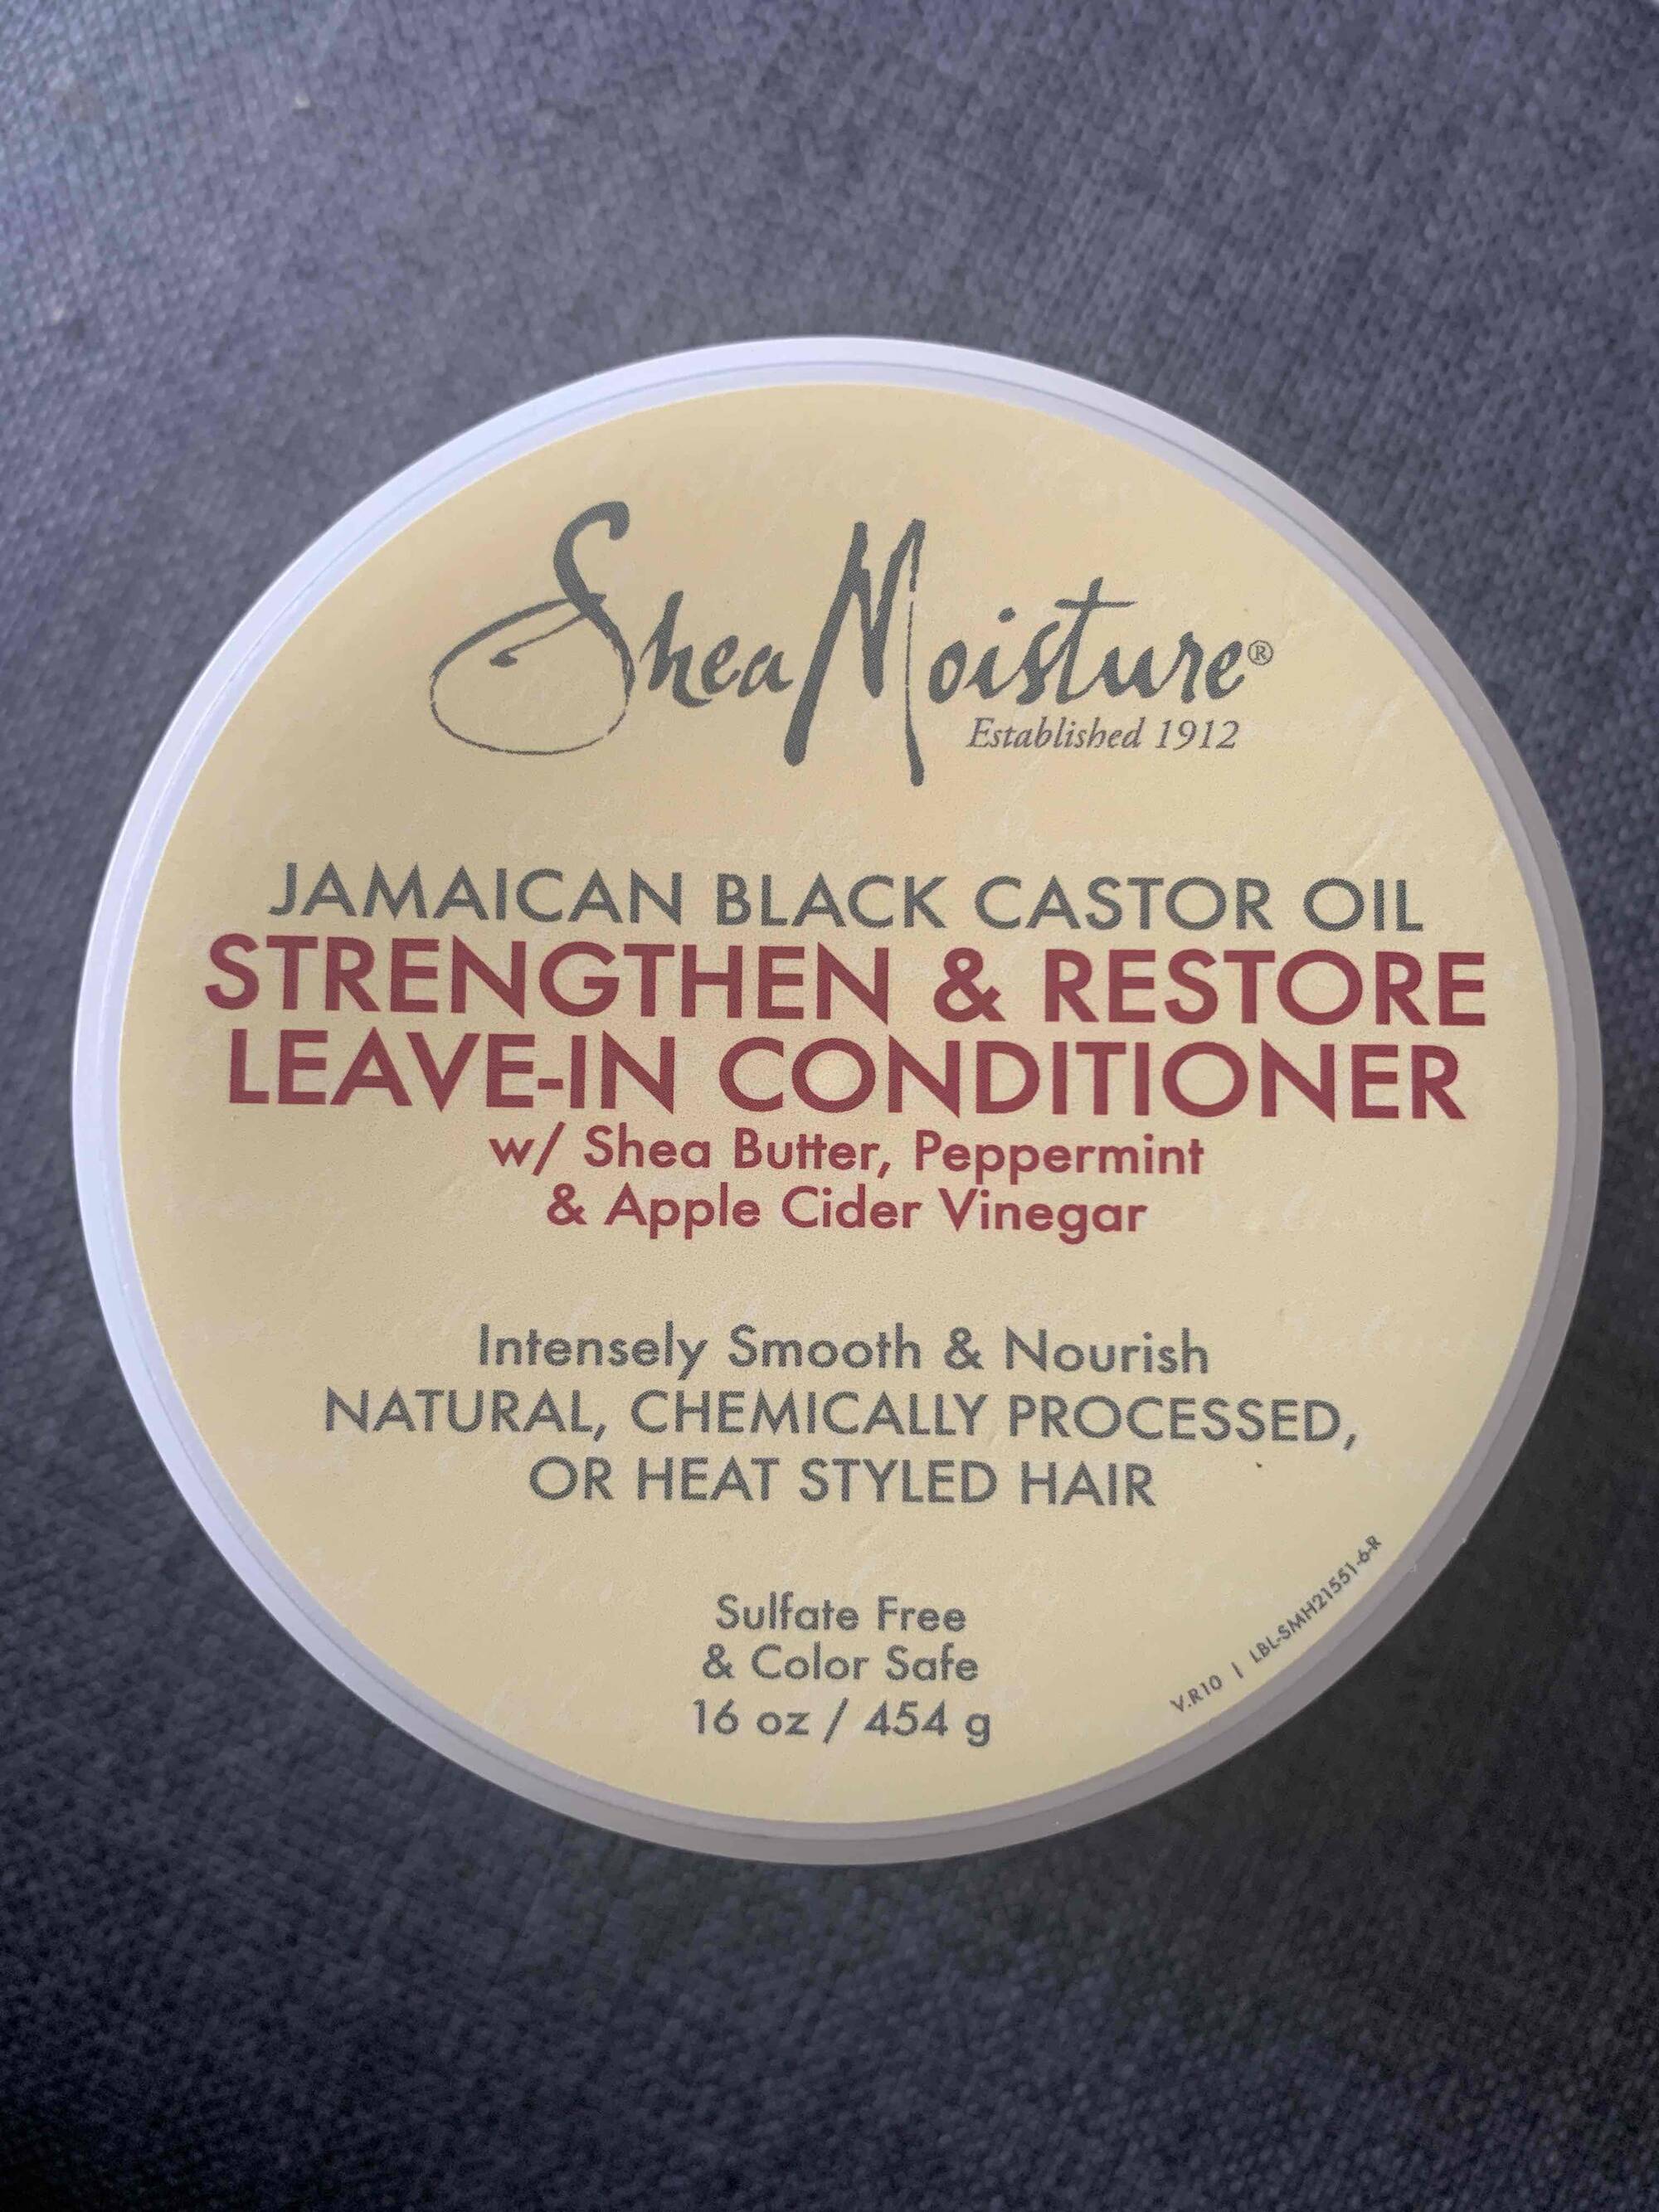 SHEA MOISTURE - Leave in conditioner - Jamaican black castor oil 